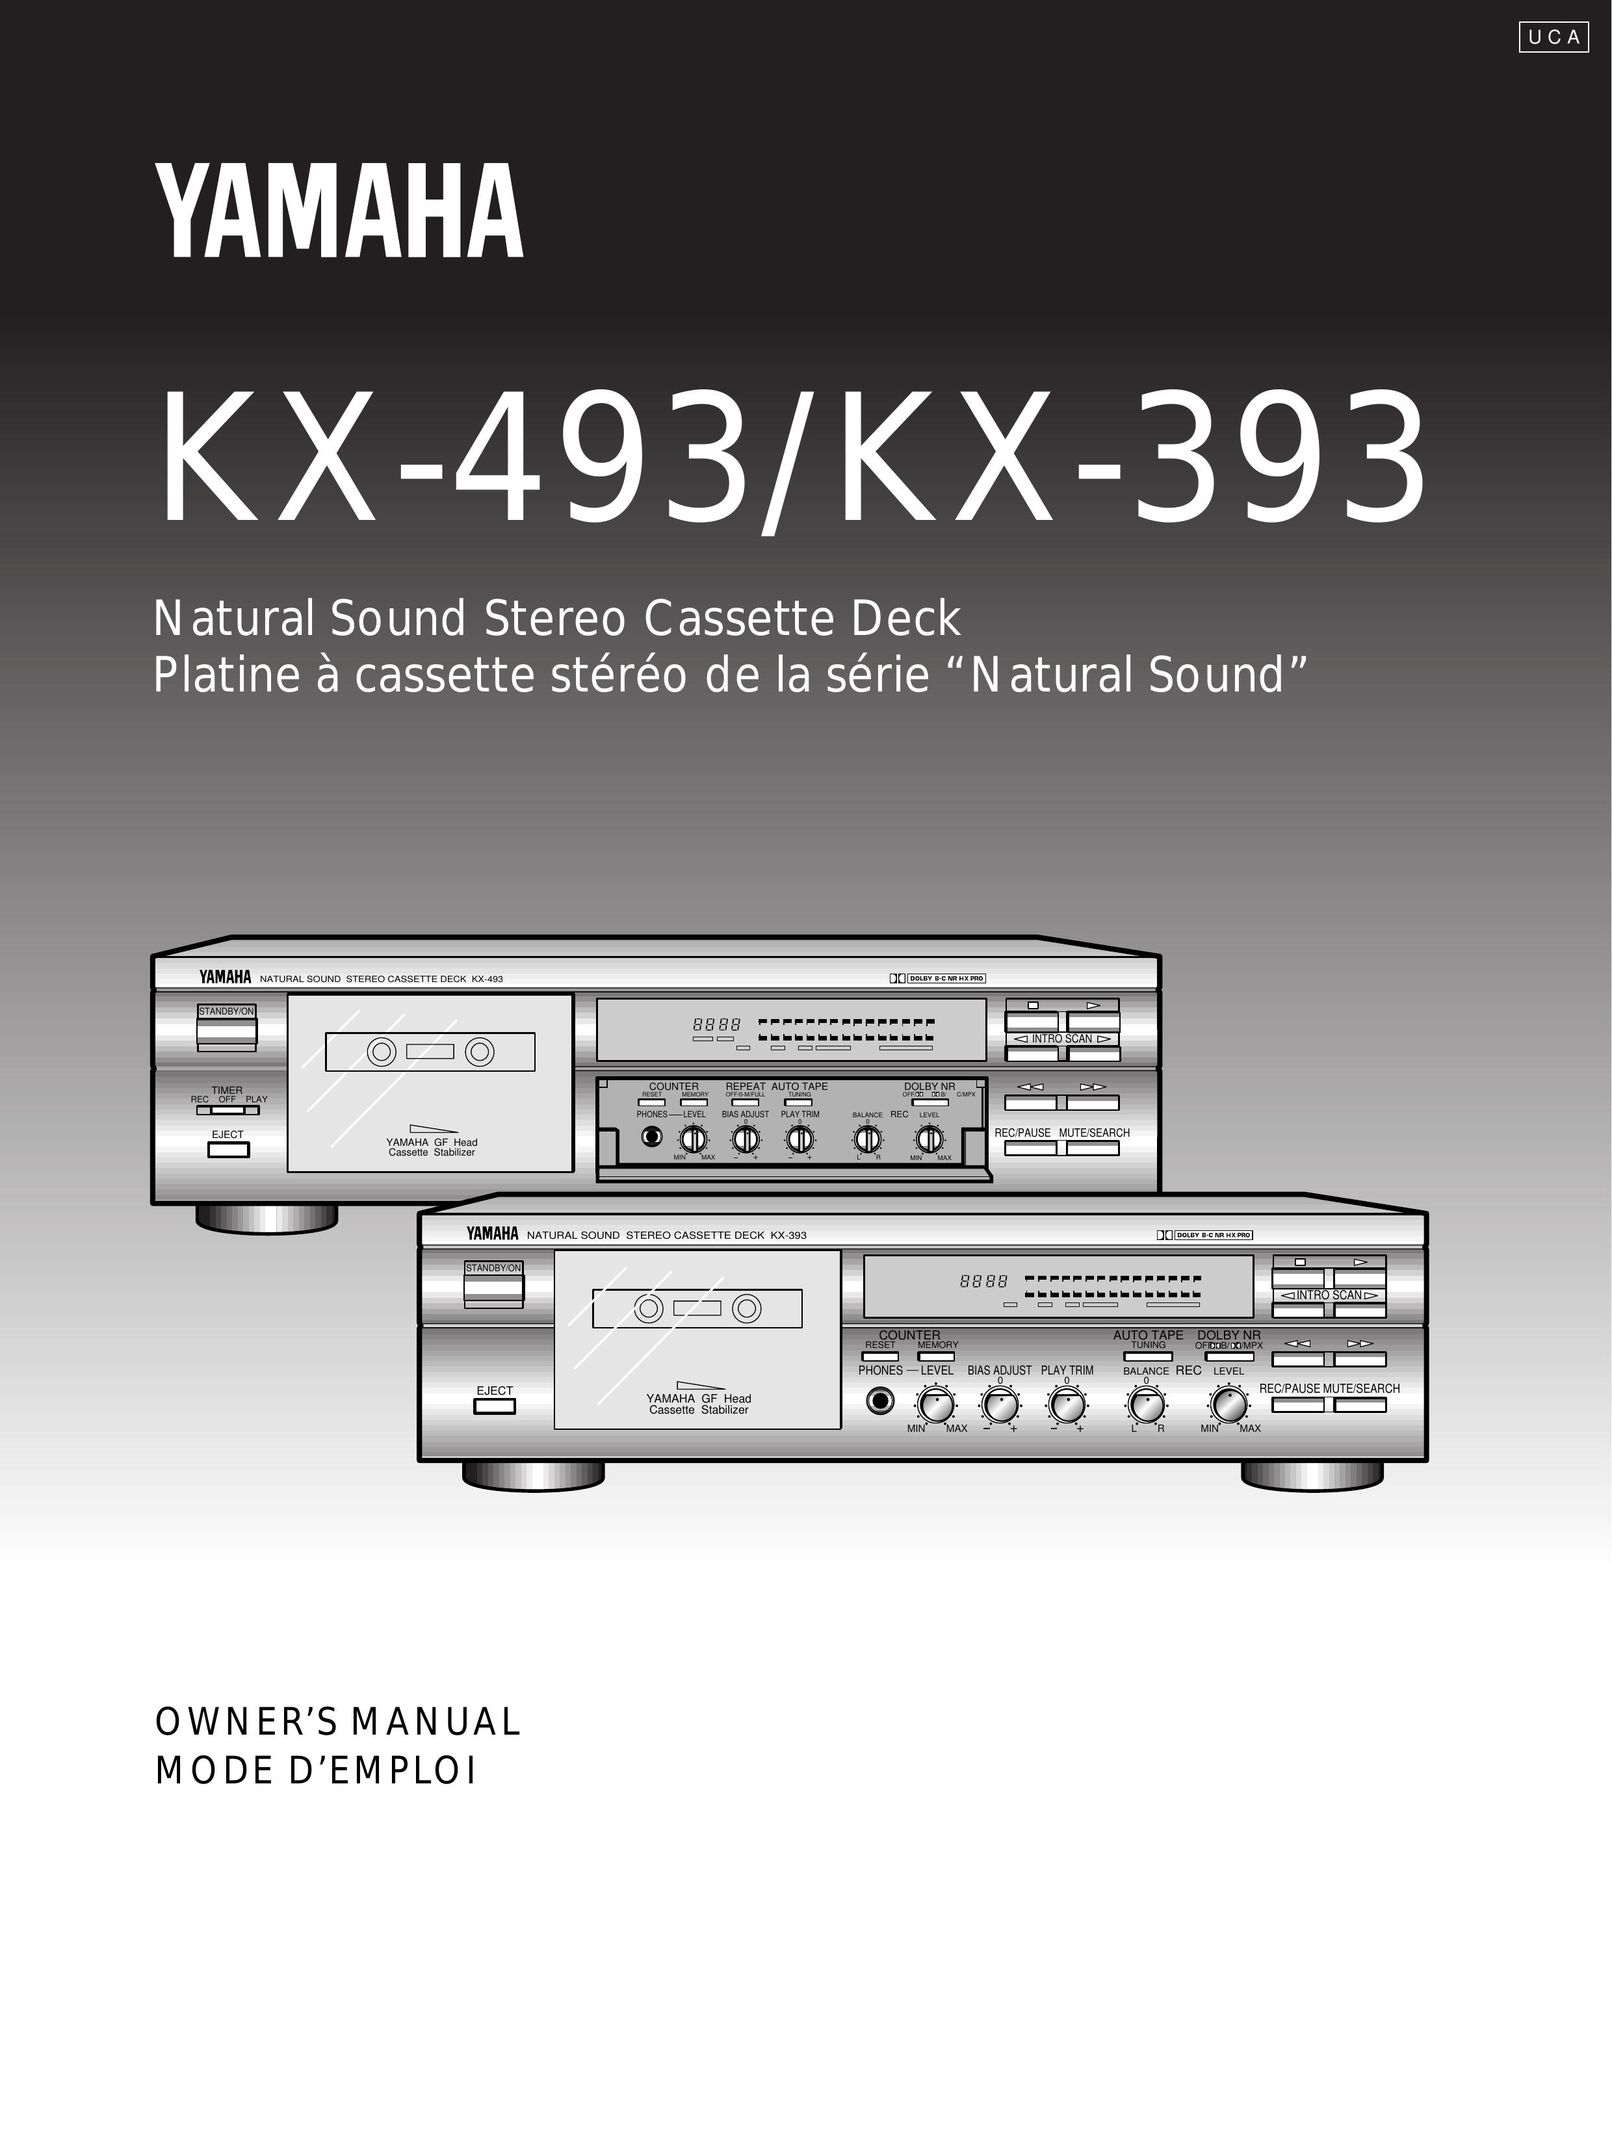 Yamaha KX-393 Cassette Player User Manual